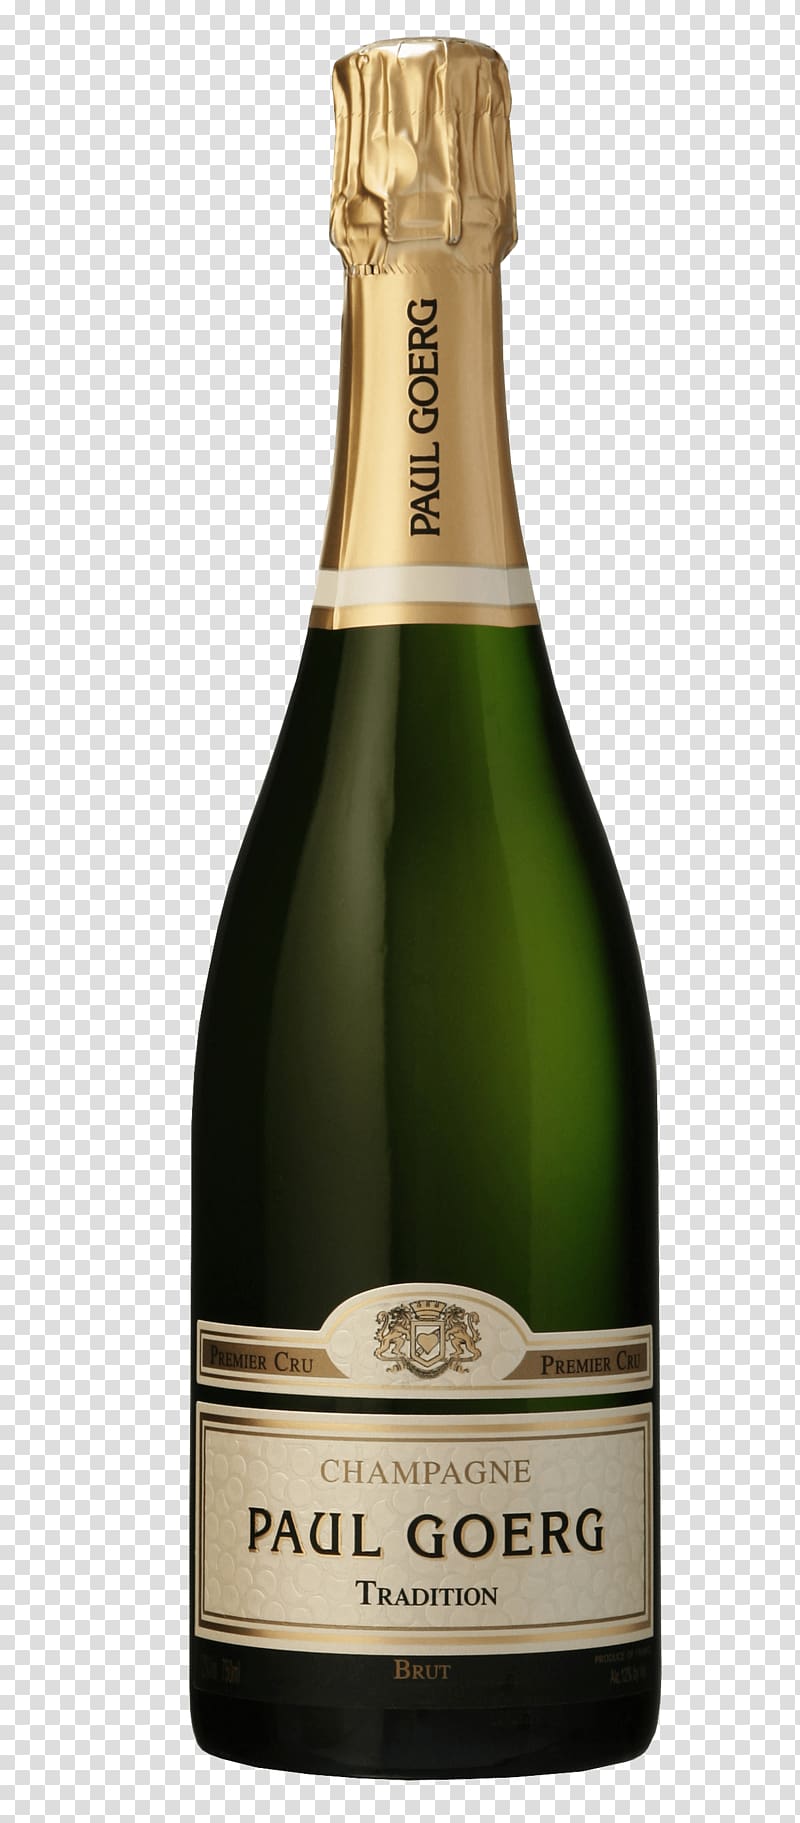 Champagne Paul Goerg Wine Côte des Blancs Bollinger, champagne transparent background PNG clipart